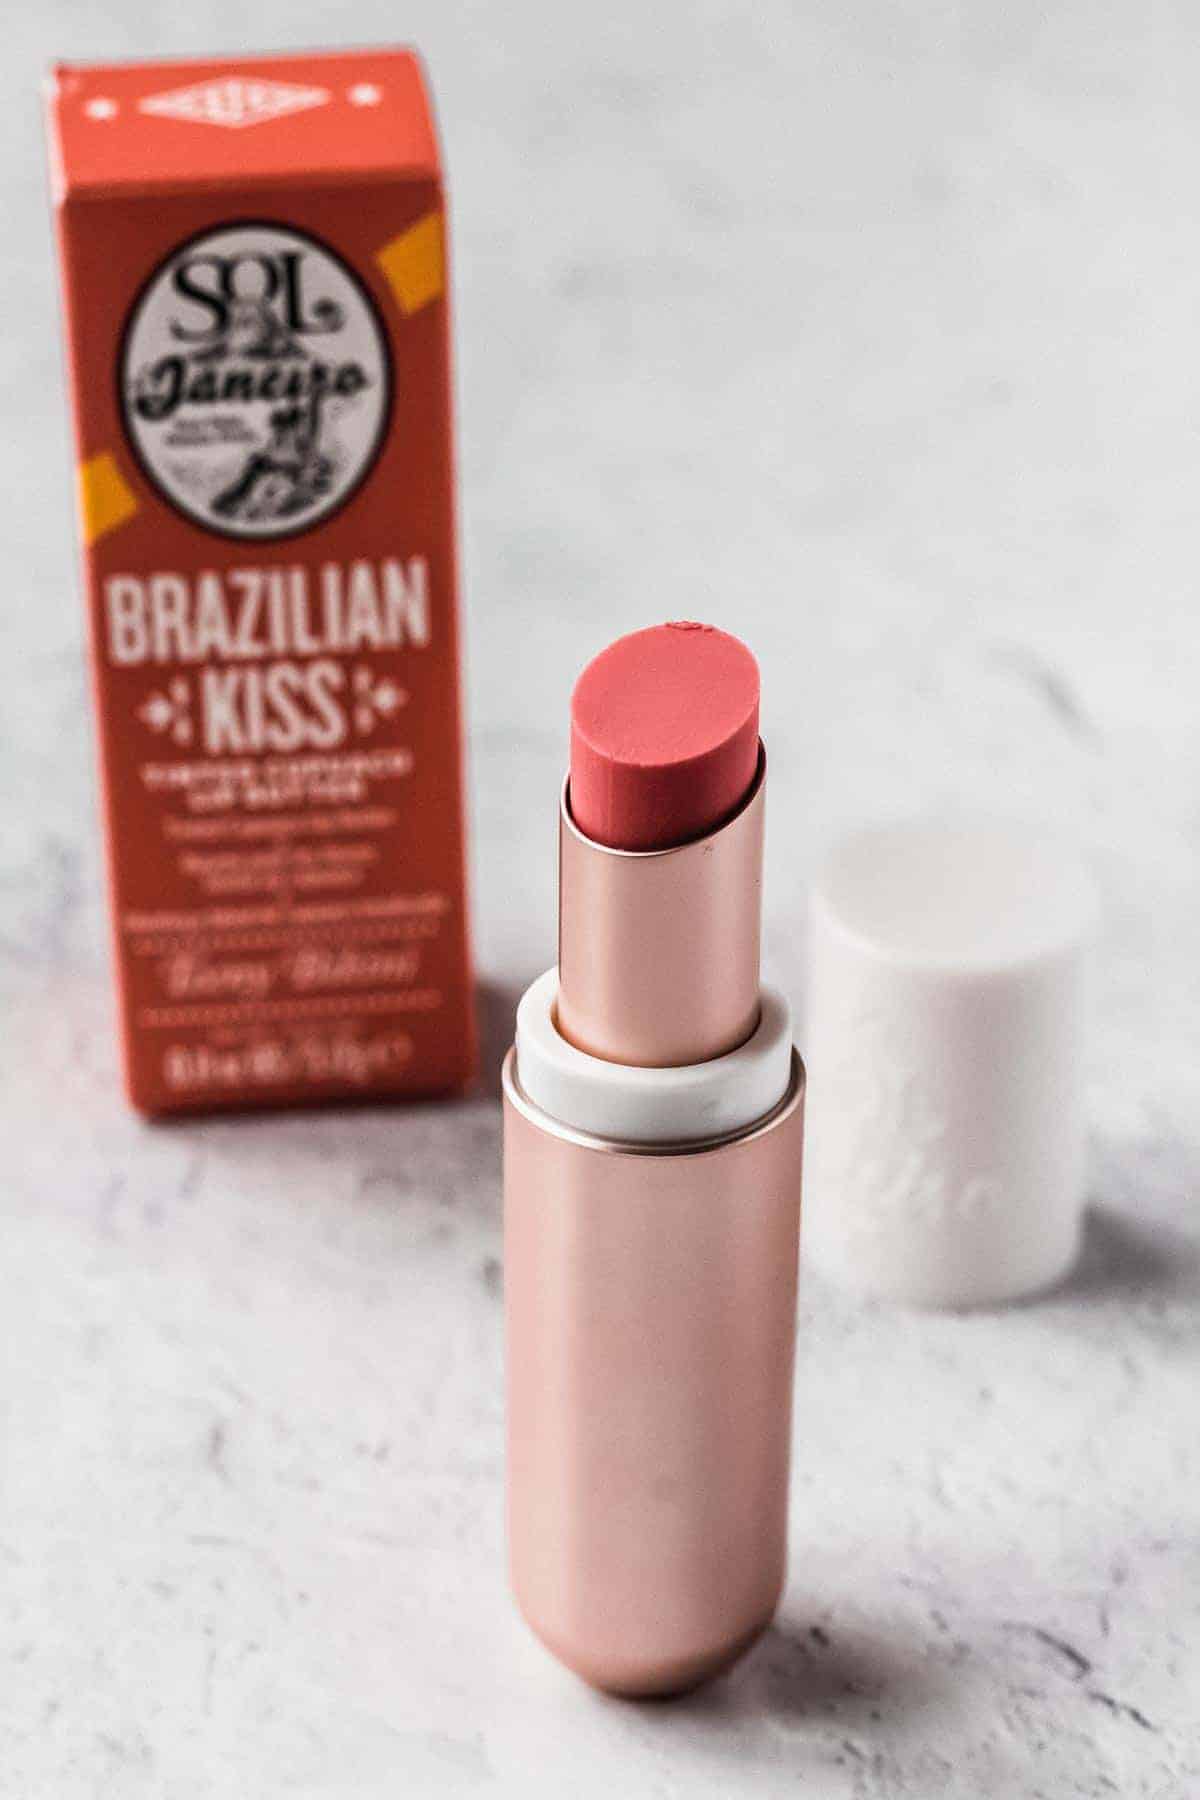 Sol de Janeiro Brazilian Kiss Tinted Cupuacu Lip Butter in Teeny Bikini opened on a white background